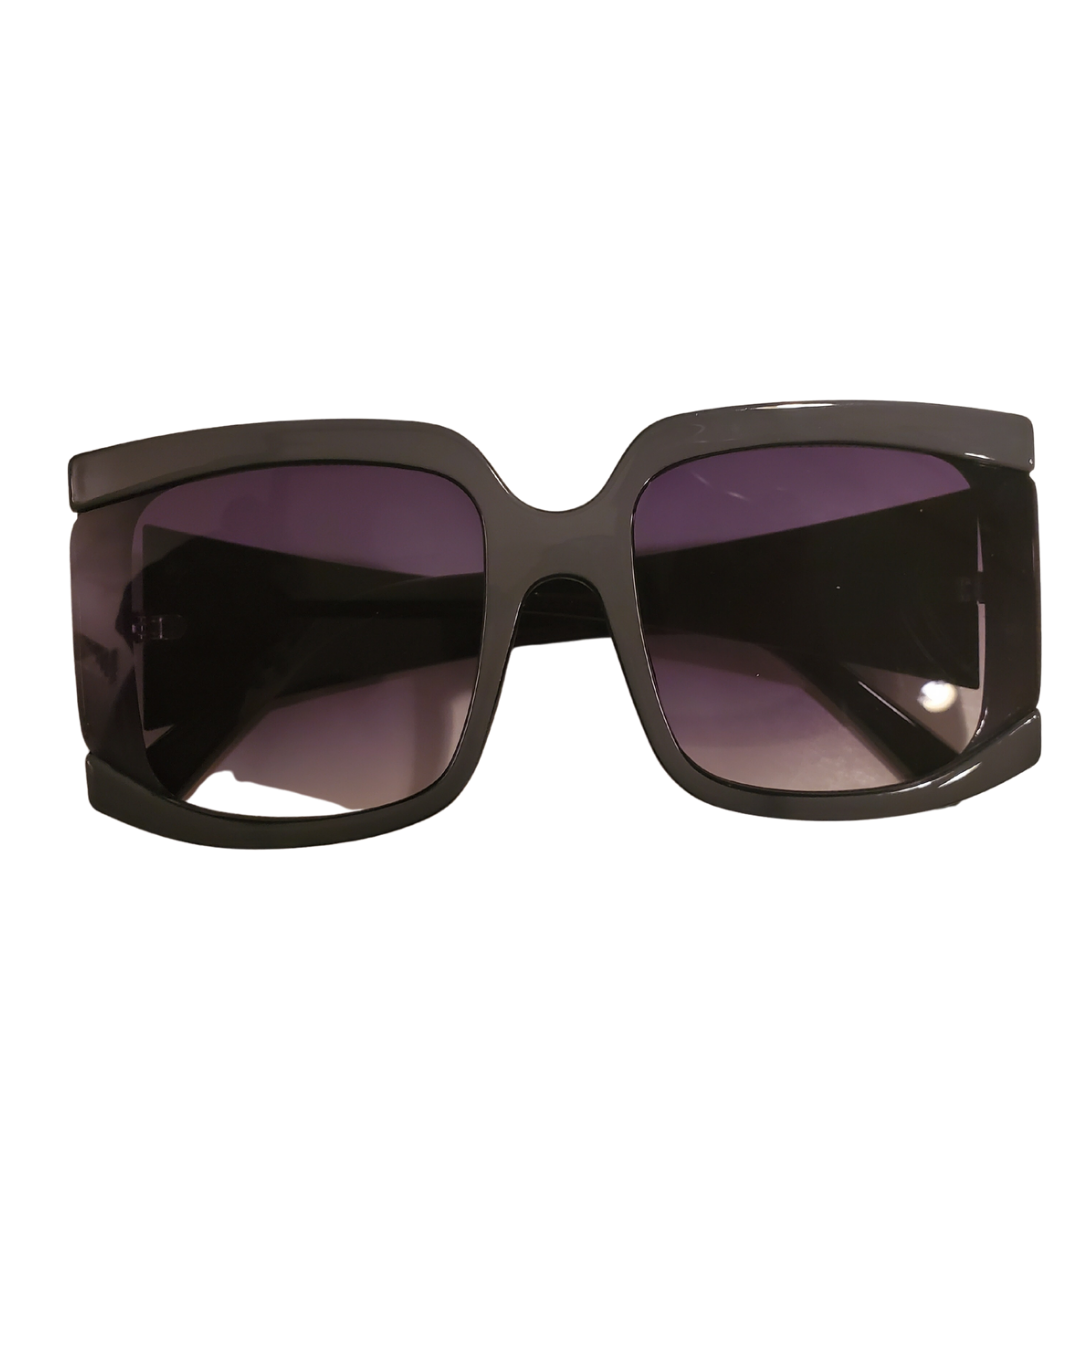 image of gray sunglasses